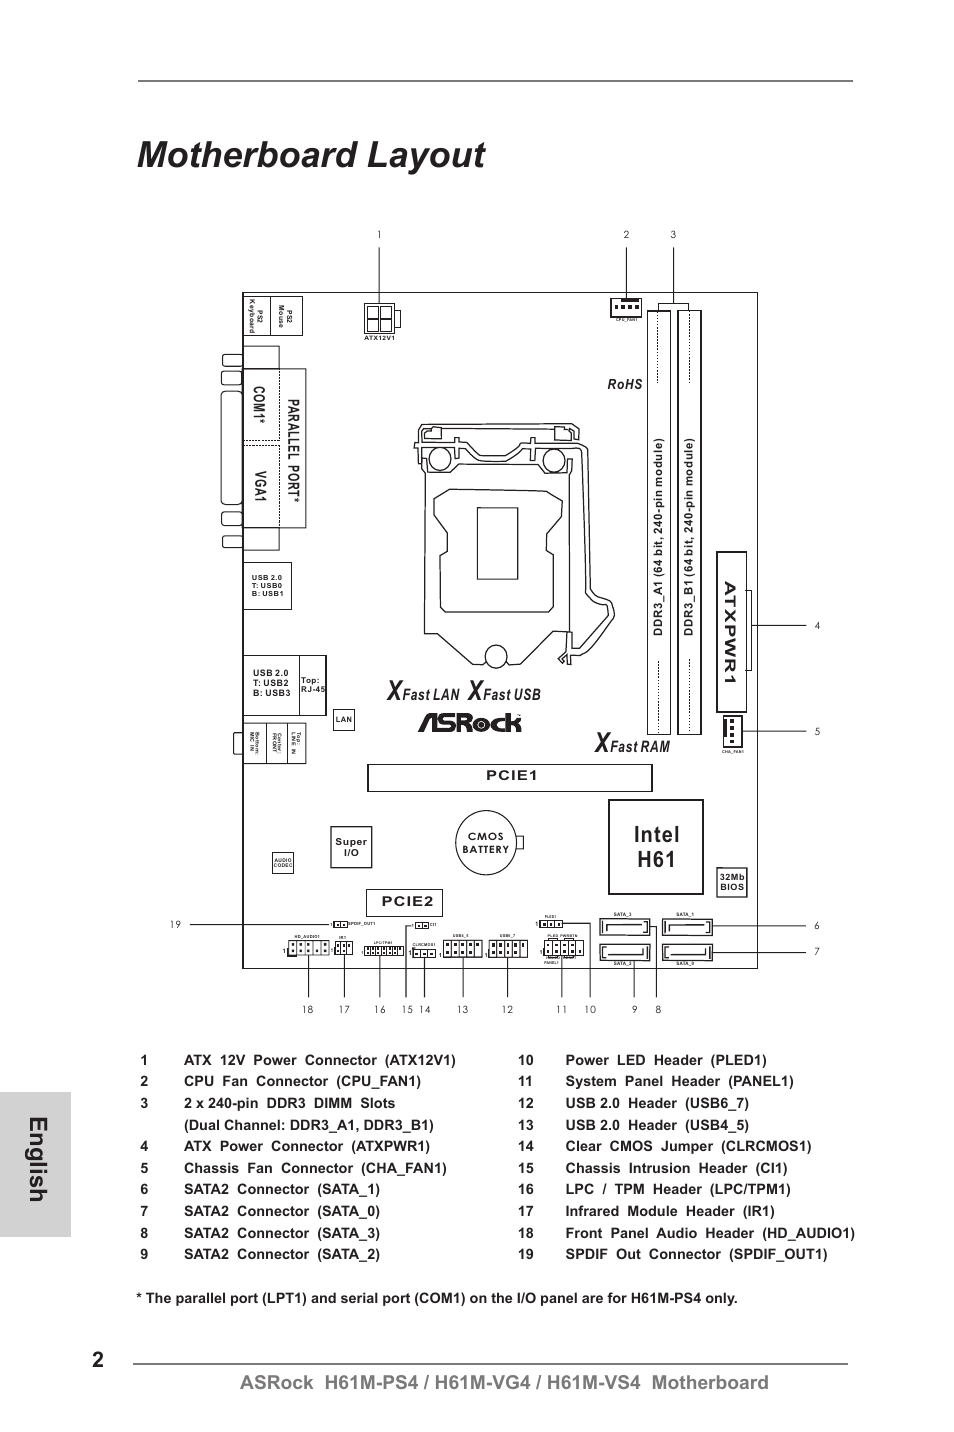 Motherboard layout, English, Intel h61 | ASRock H61M-VG4 User Manual | Page  2 / 52